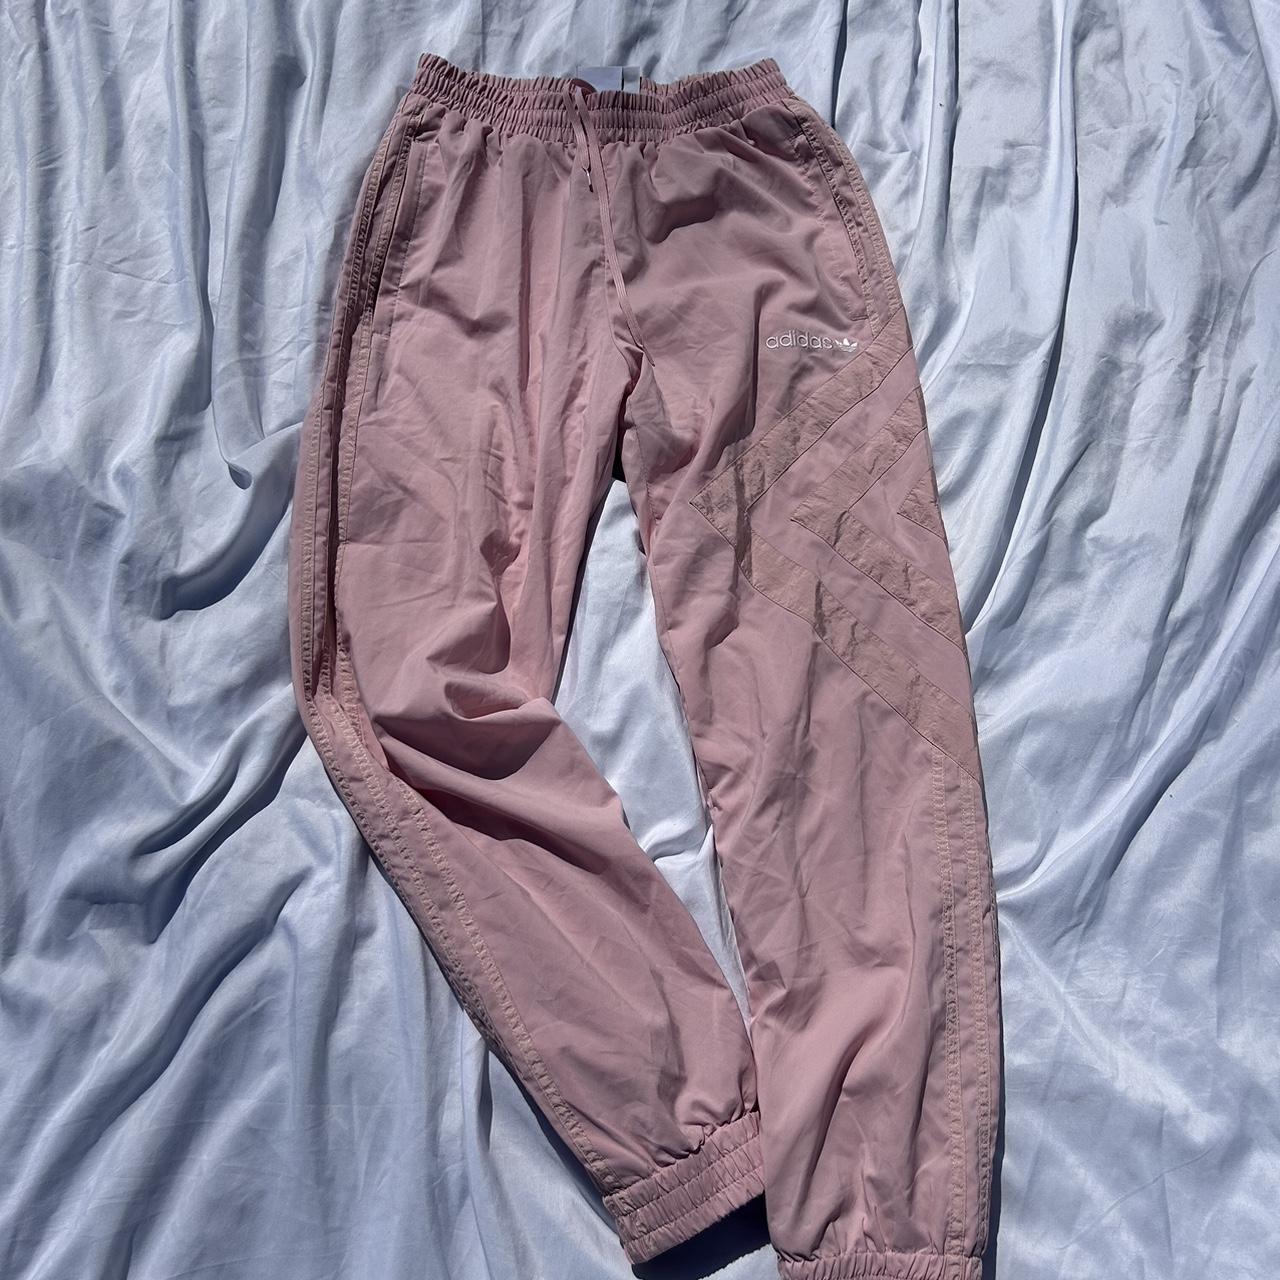 adidas Originals split front track pant in pink | ASOS